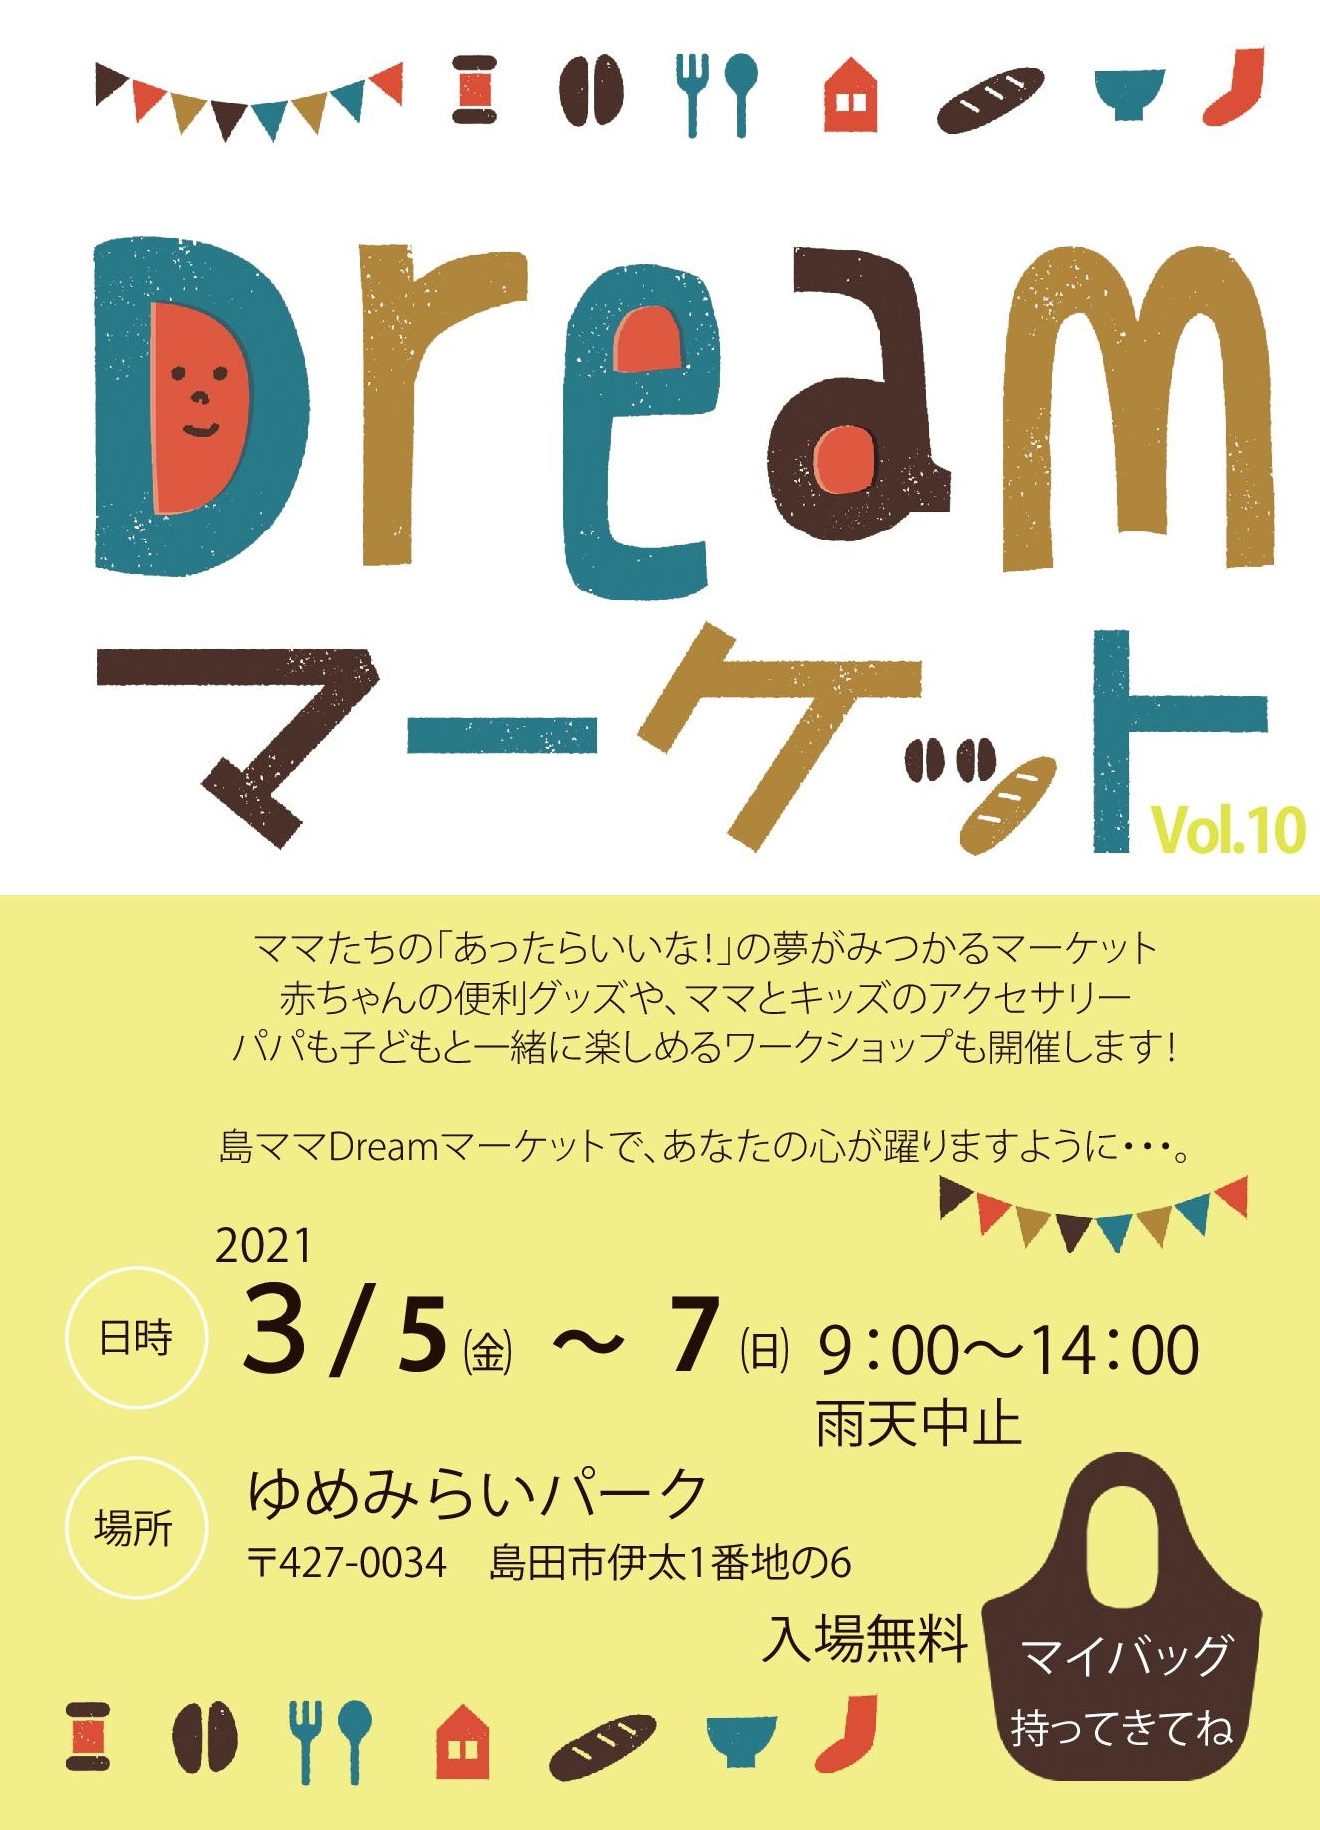 Dreamマーケット・Vol.10